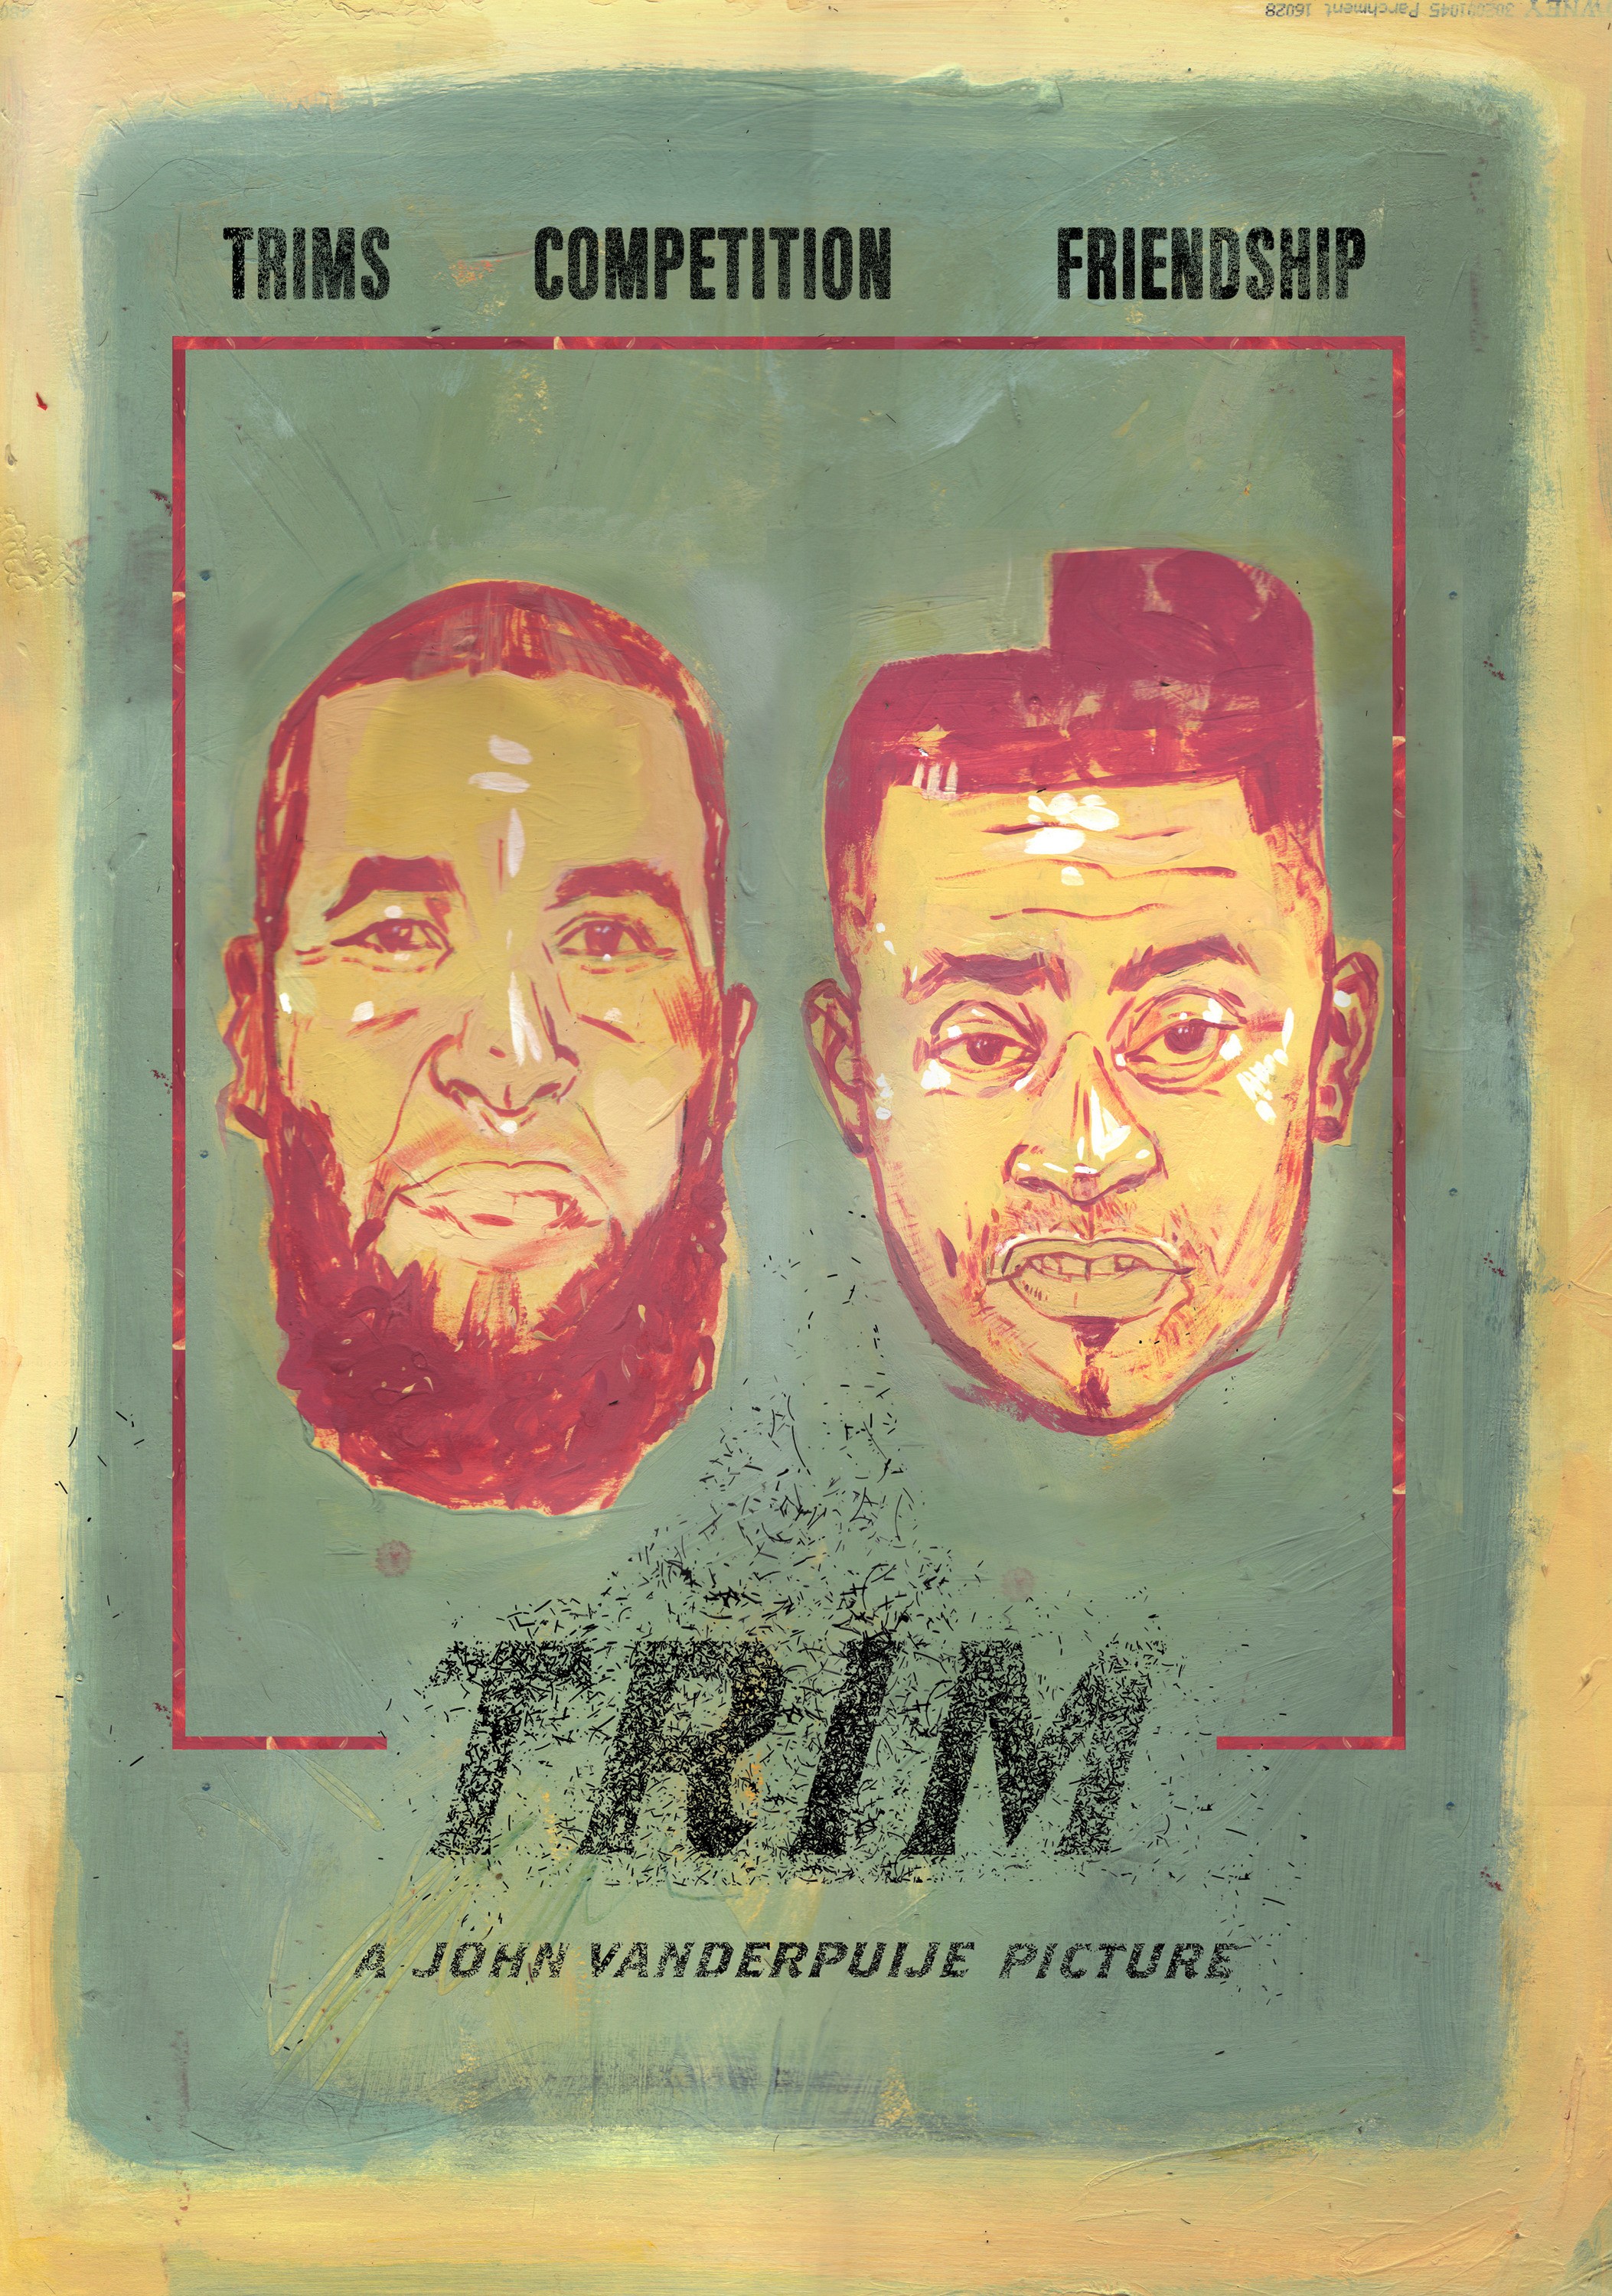 Mega Sized Movie Poster Image for Trim